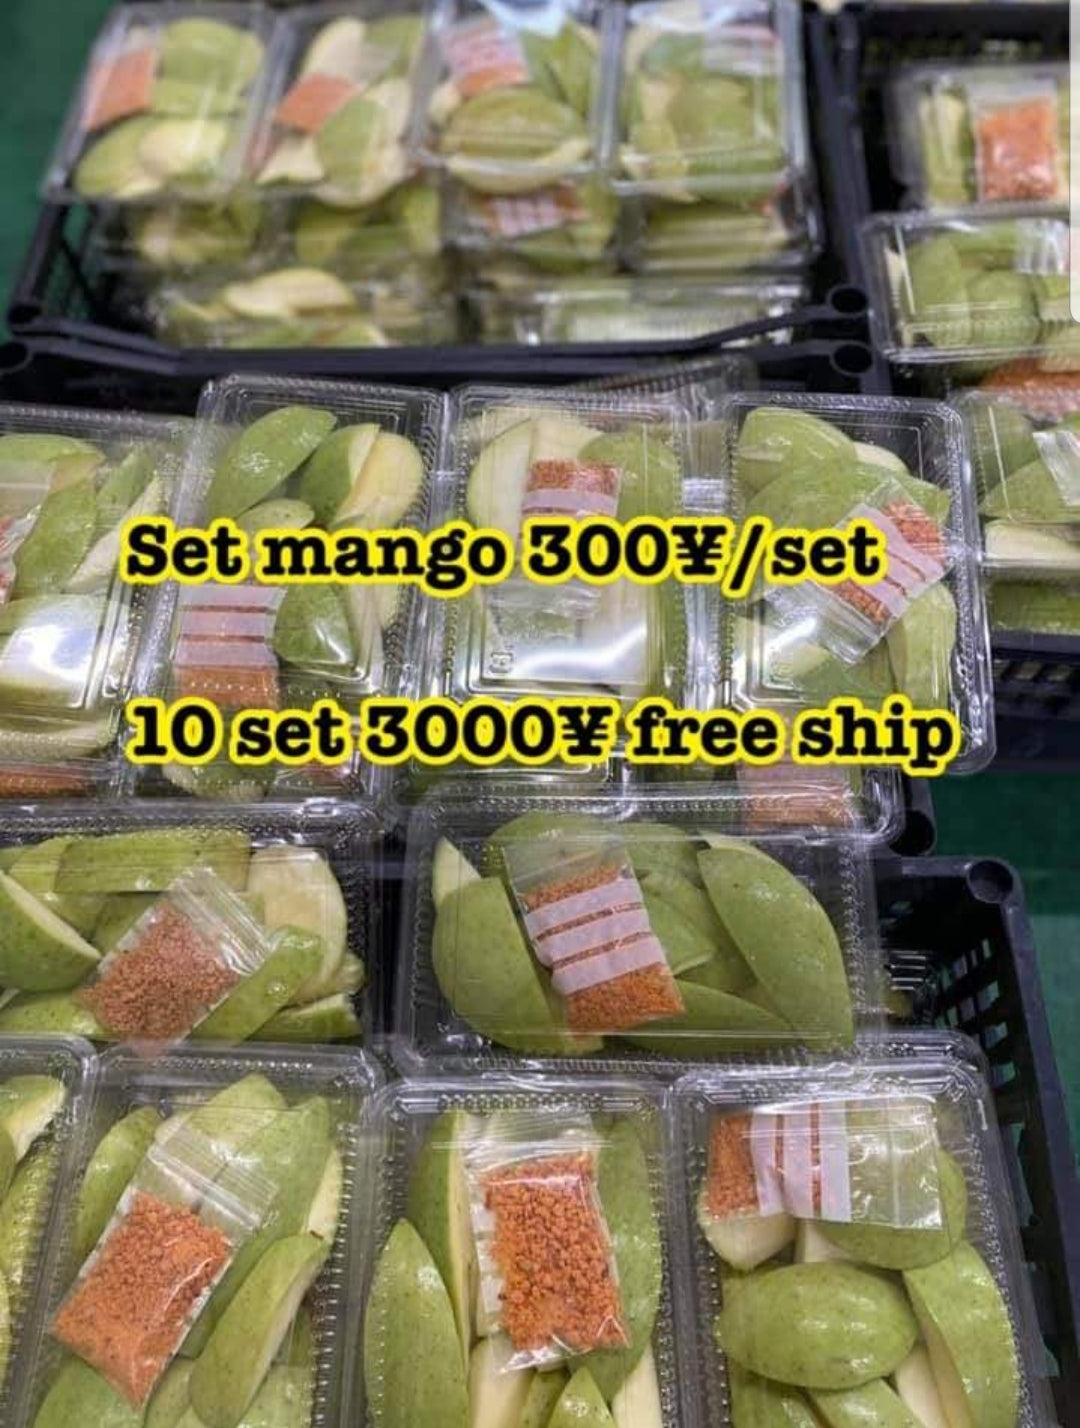 A Set Of Green Mangos